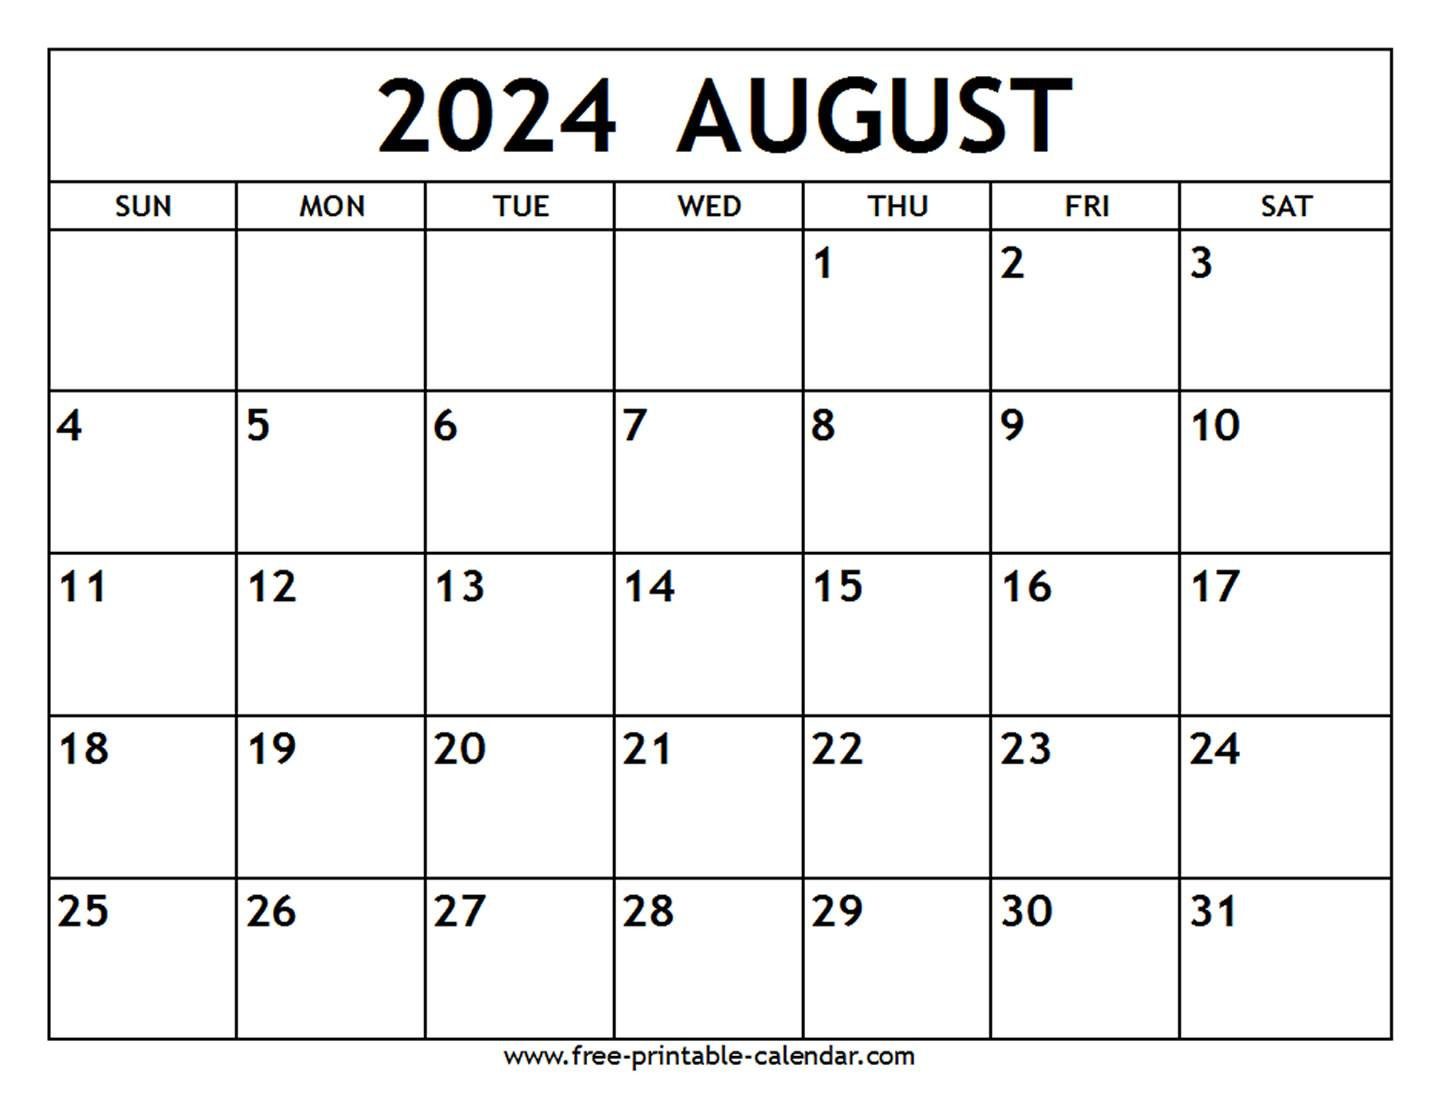 August 2024 Calendar - Free-Printable-Calendar intended for Free Printable Calendar August 2024 Word